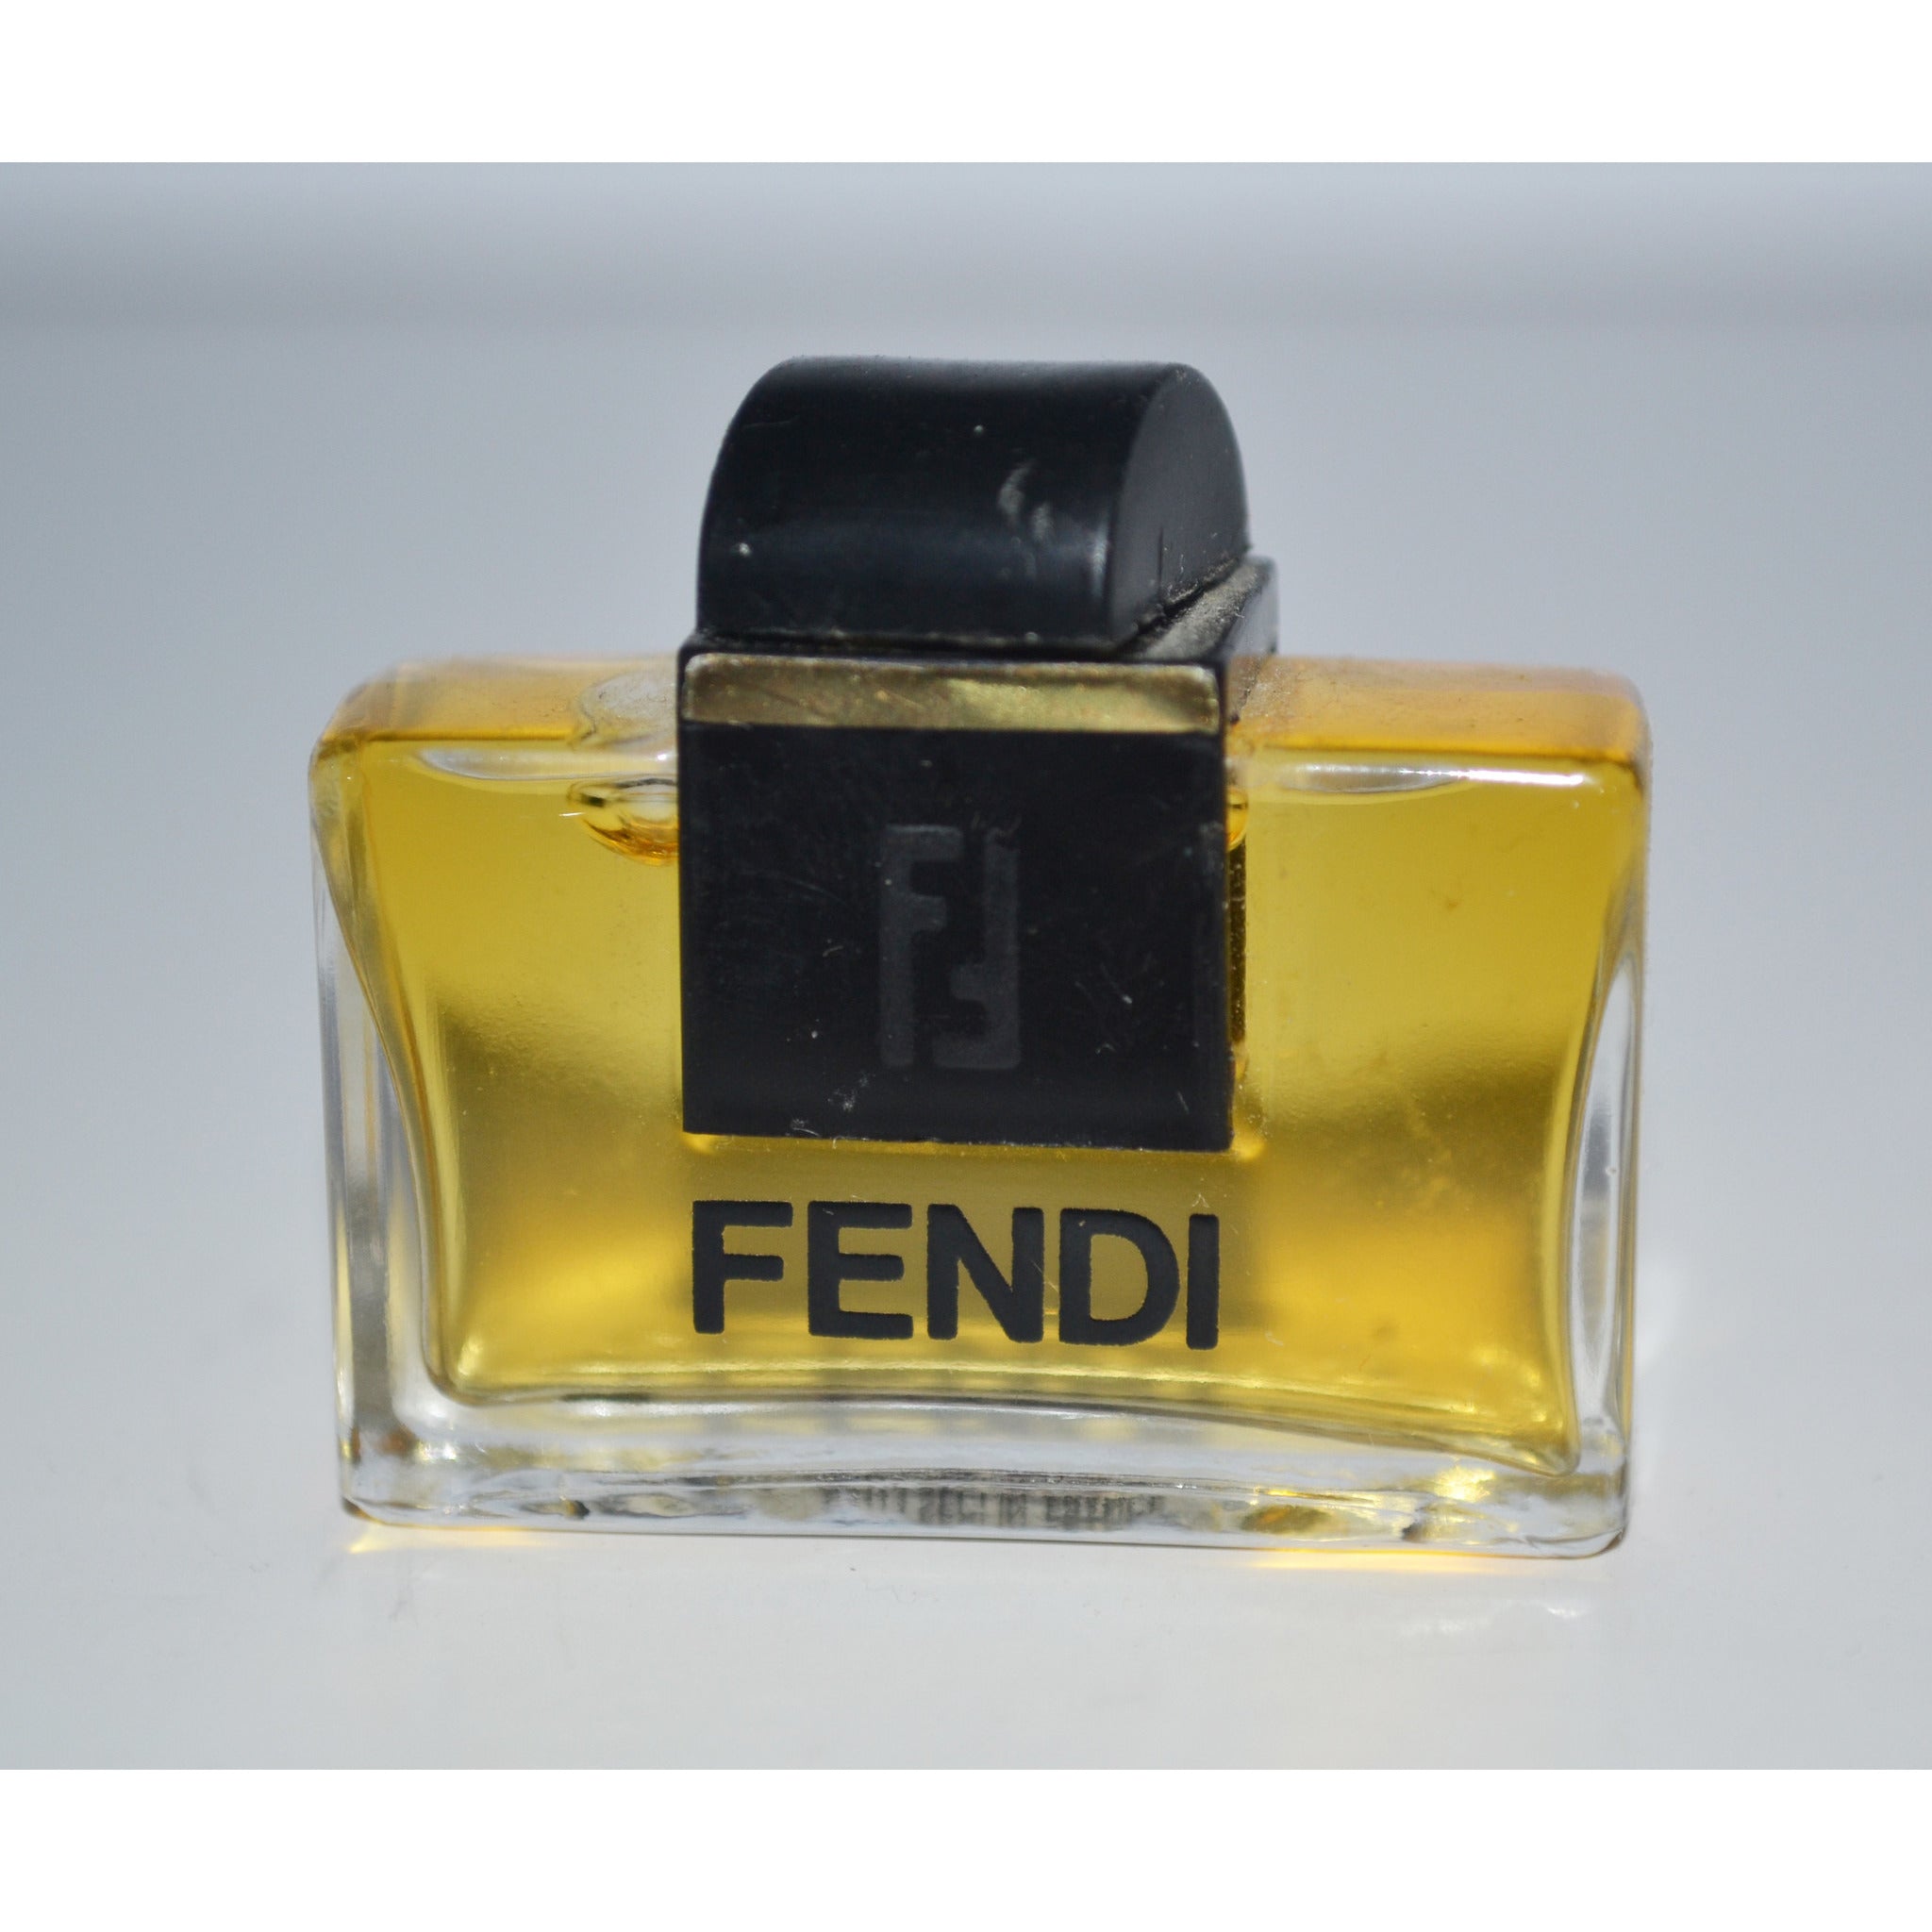 fendi by fendi perfume discontinued